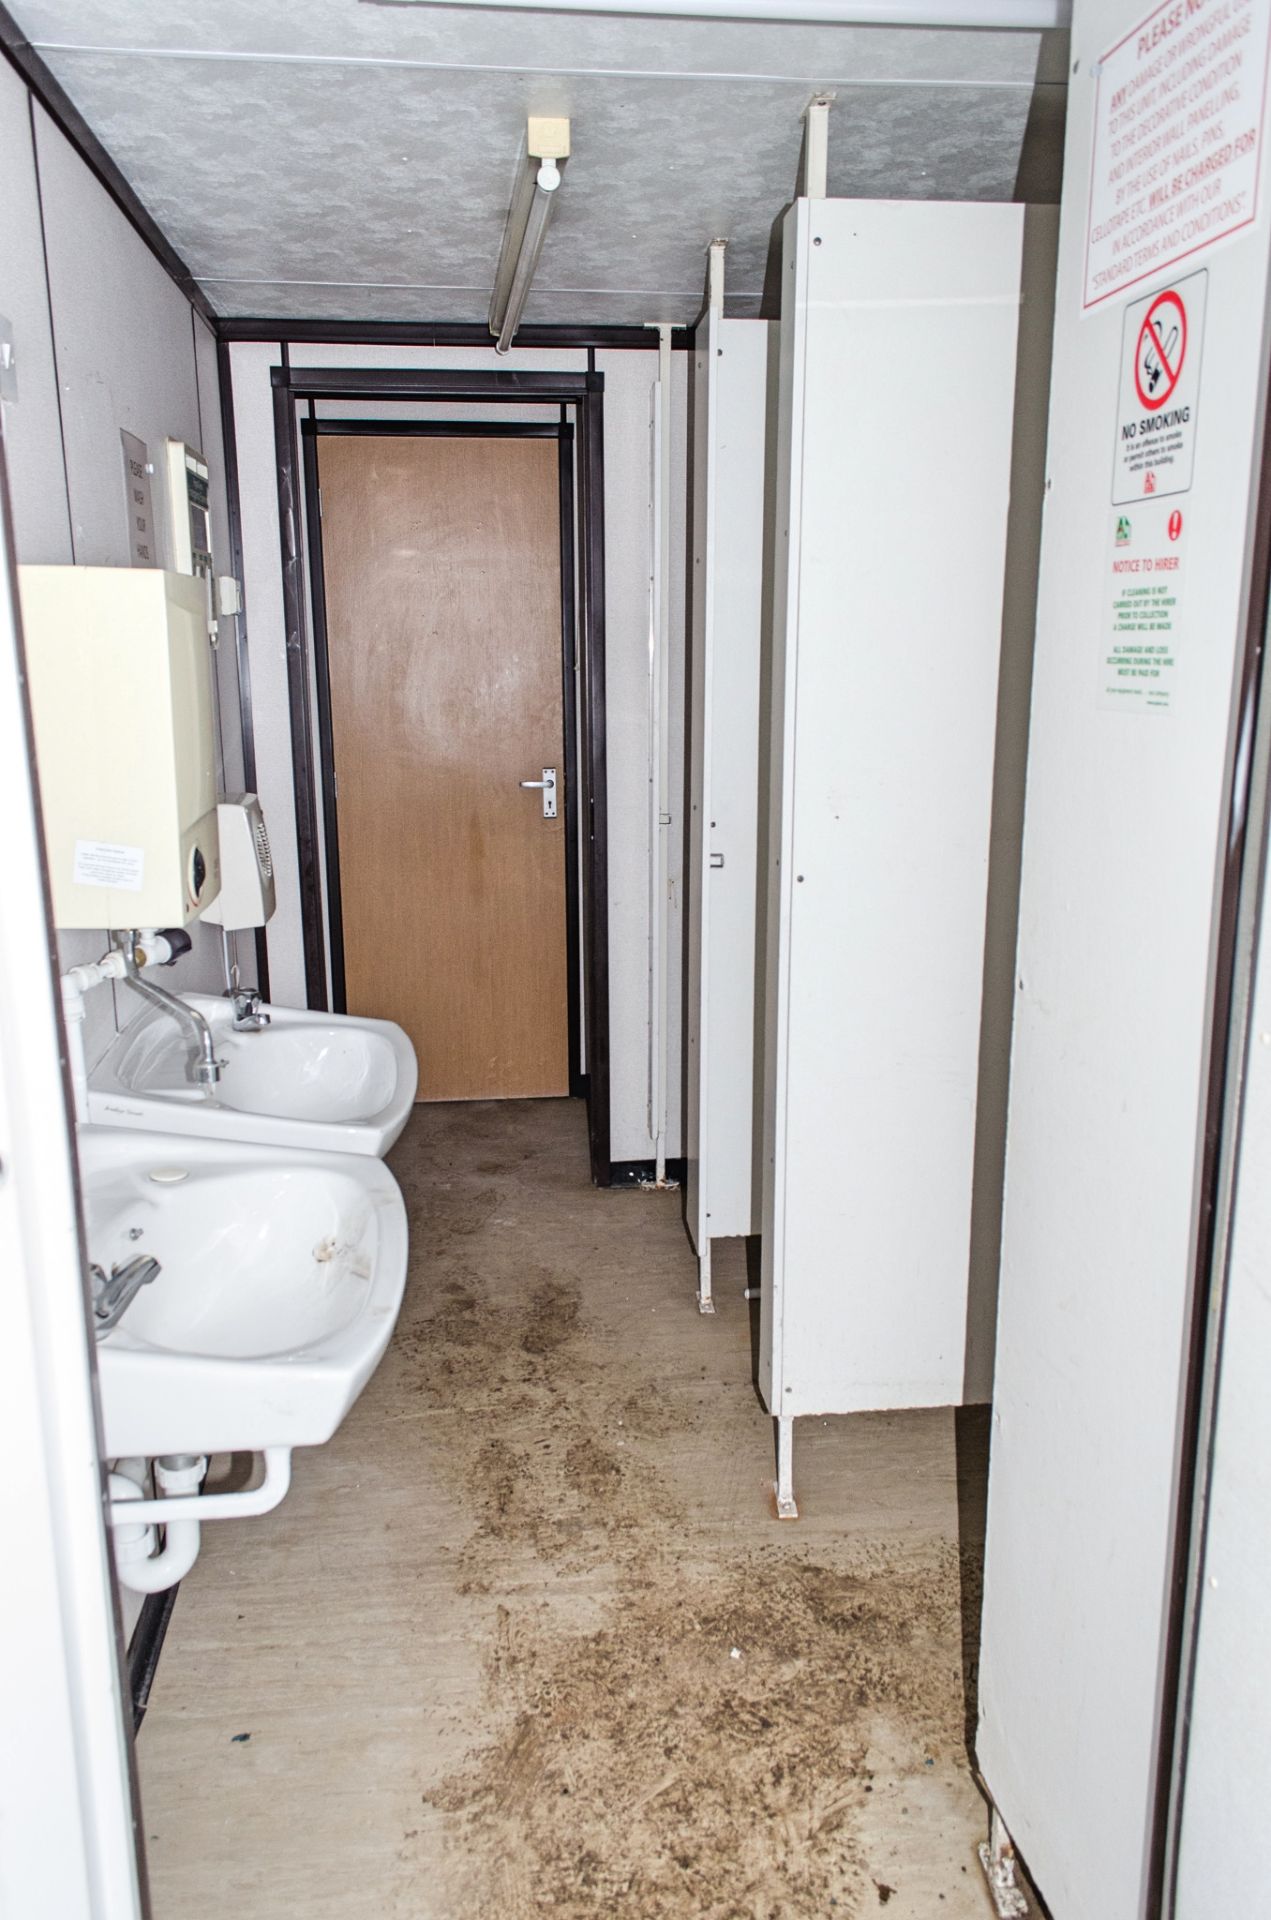 16ft x 9ft steel jack leg anti-vandal toilet site unit Comprising of: Gents toilet (3 - cubicles, - Image 5 of 12